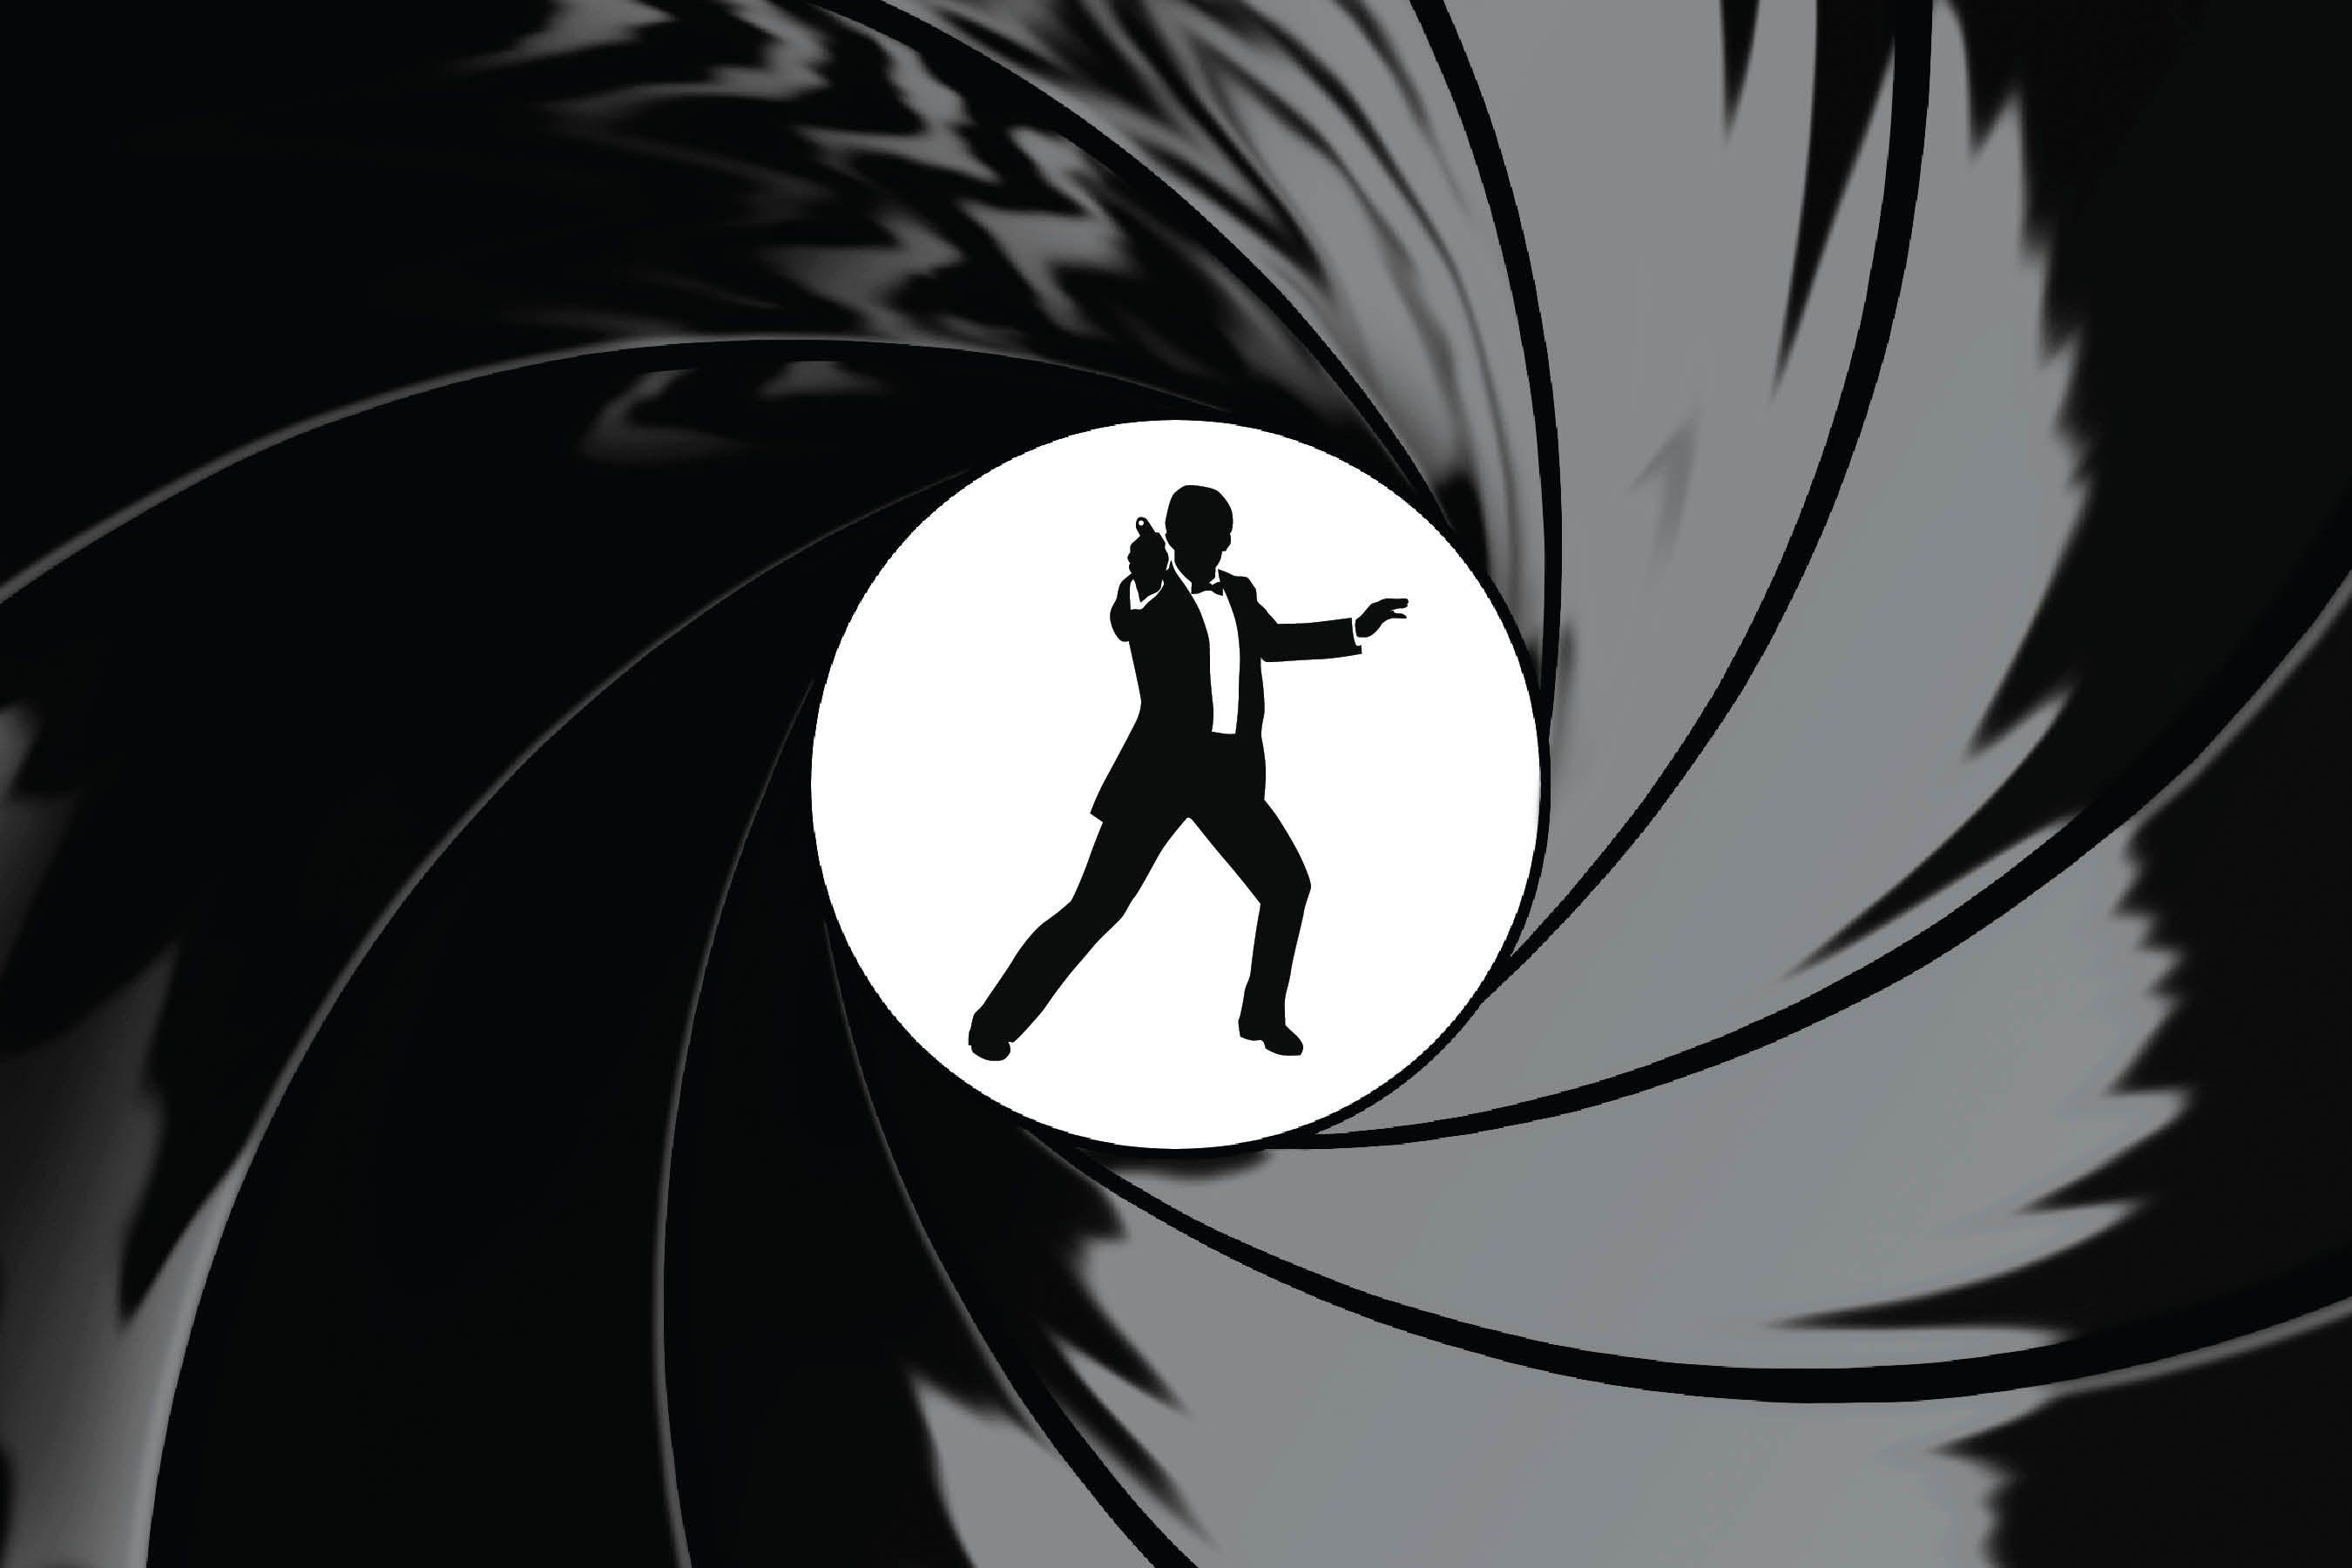 Studio Fight For Bond, James Bond Film Rights Heats Up. James bond